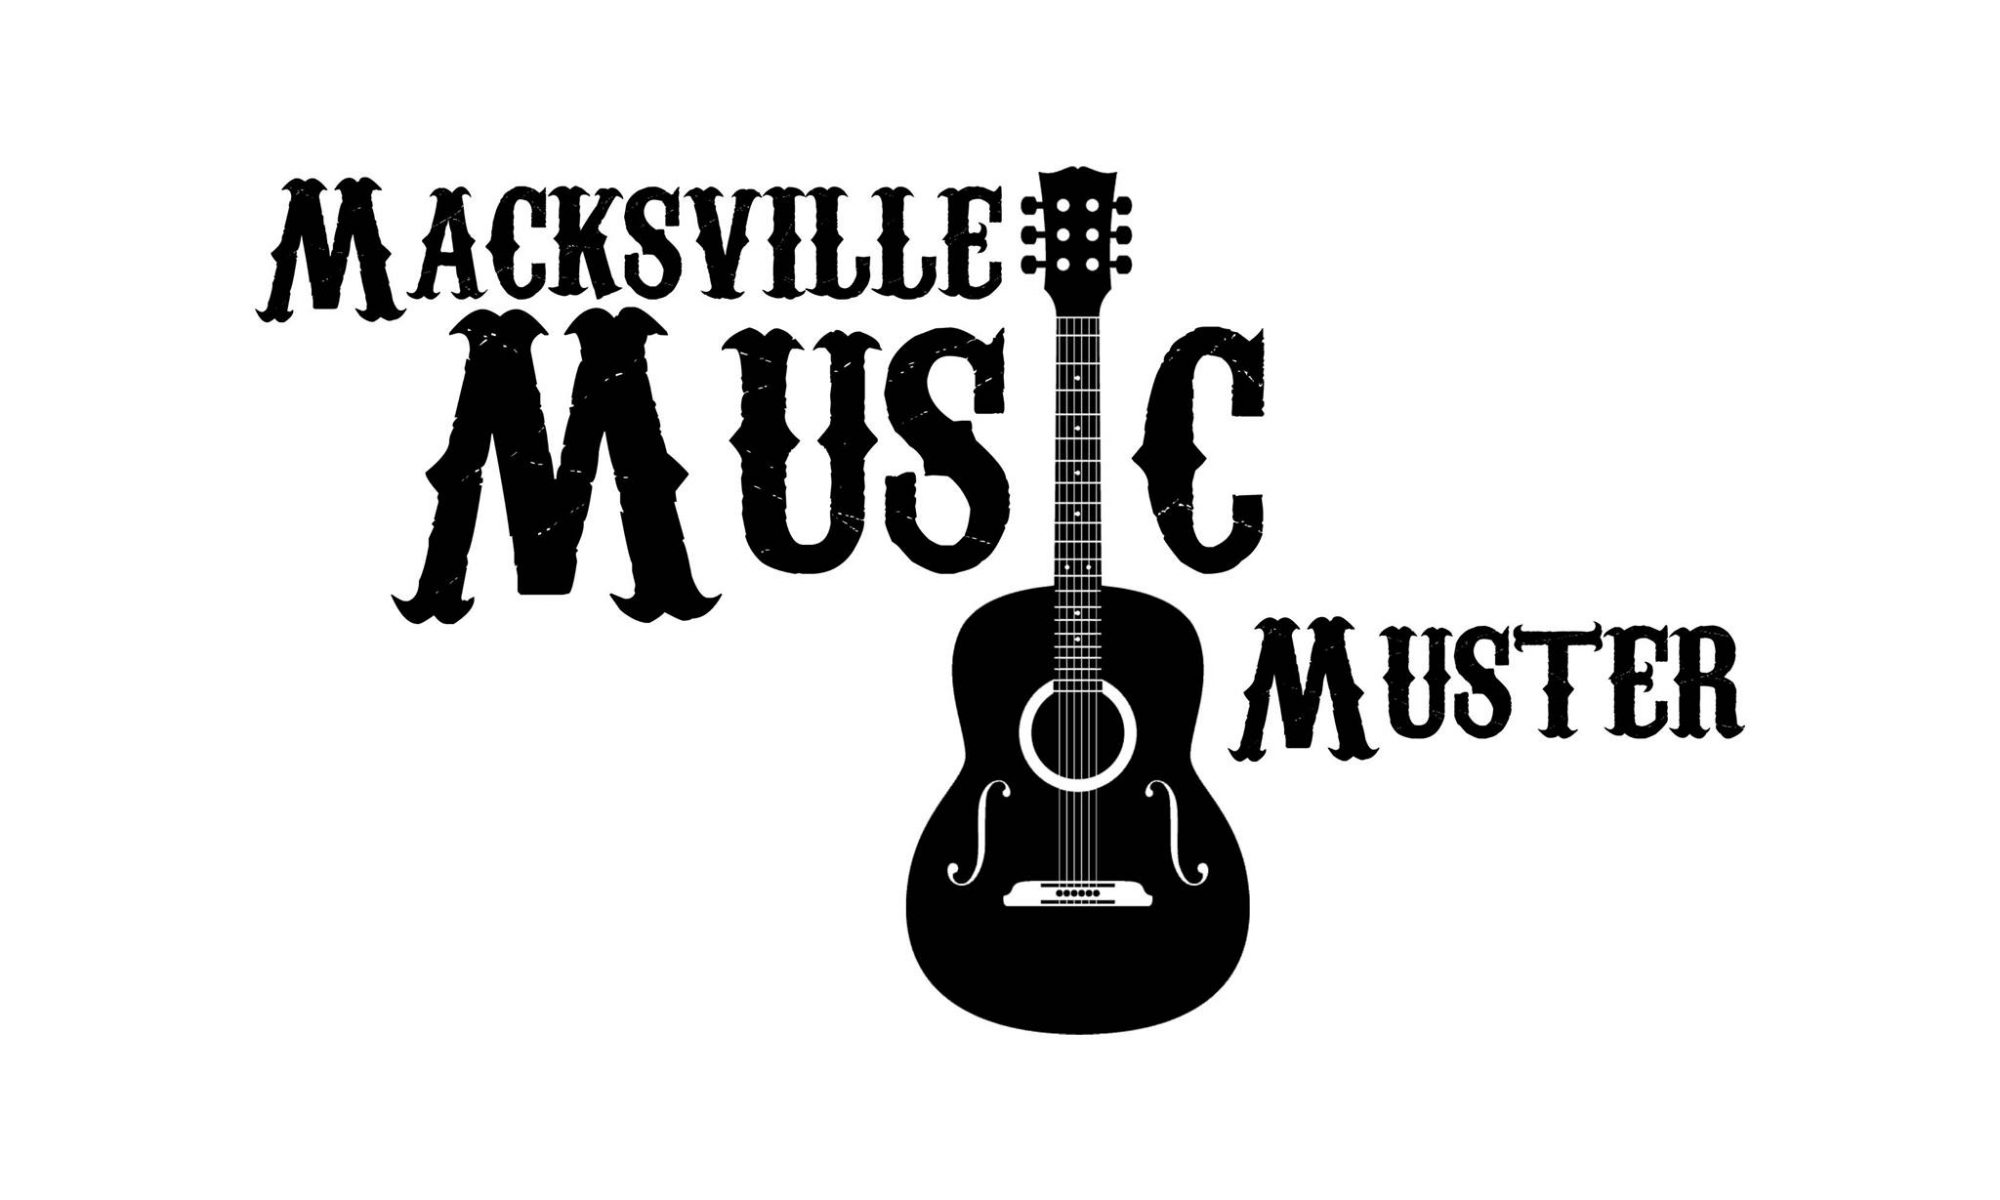 Macksville Music Muster